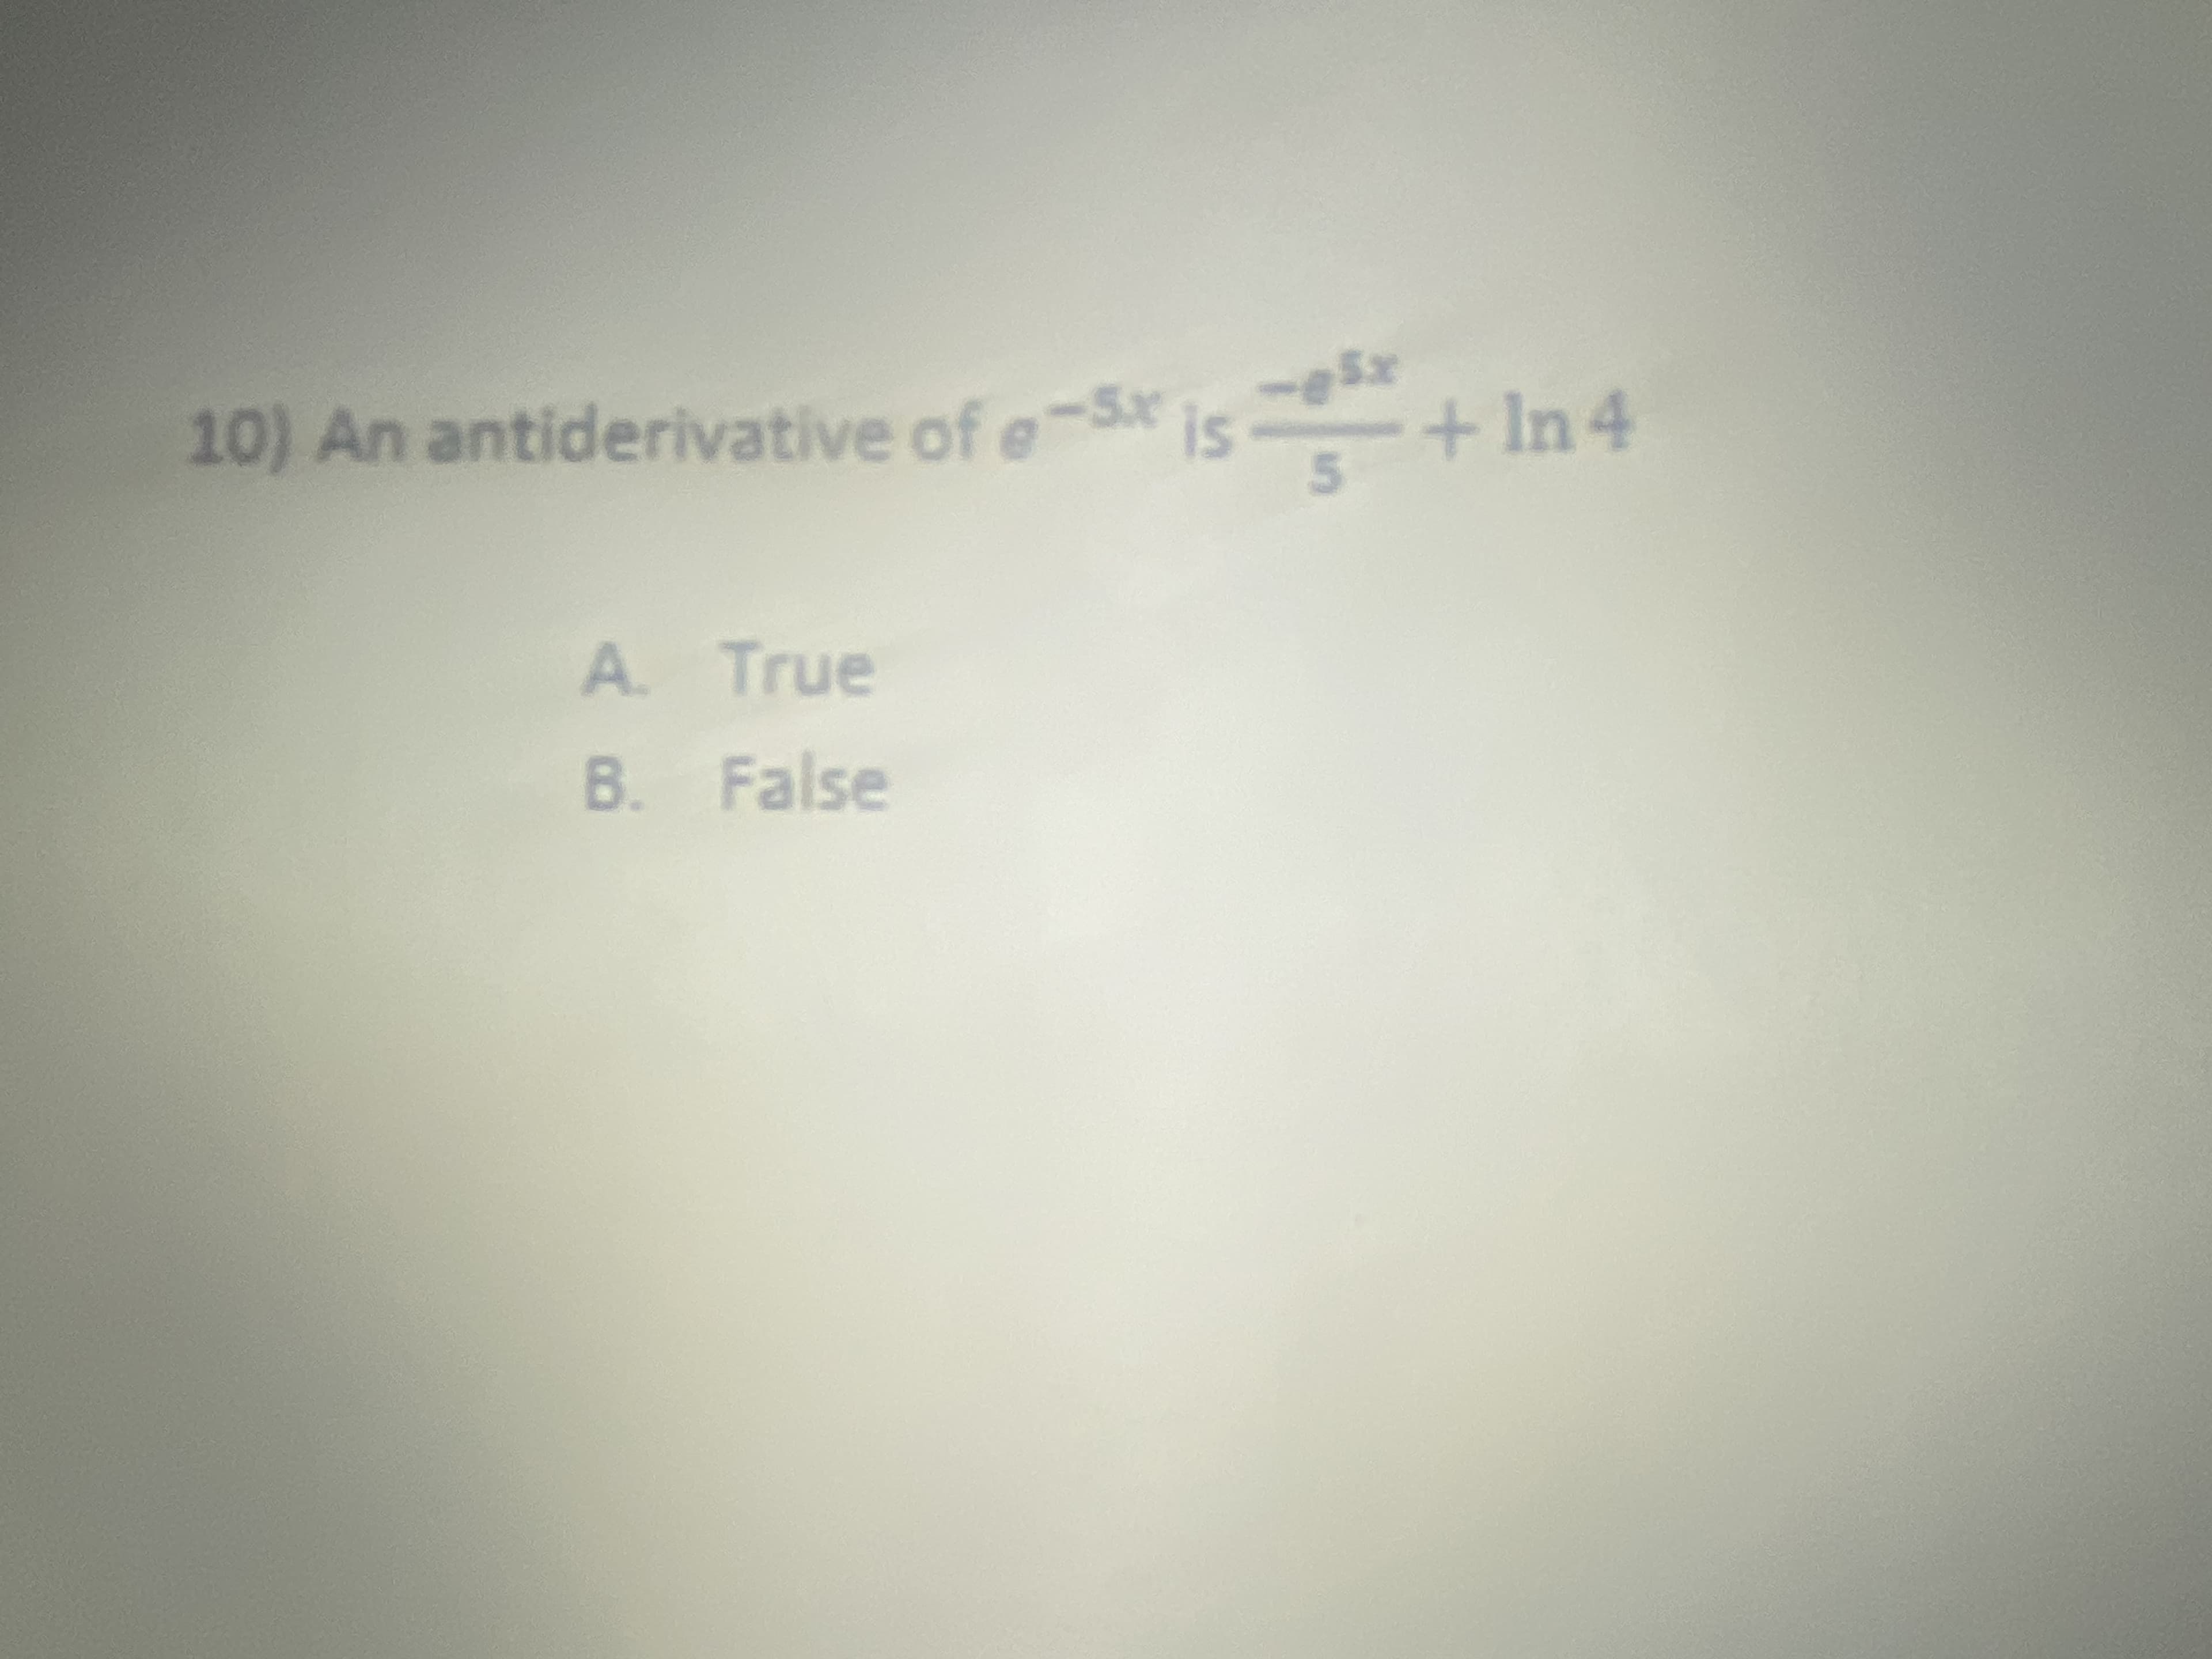 B. False
A. True
5.
10) An antiderivative of e is + In 4
